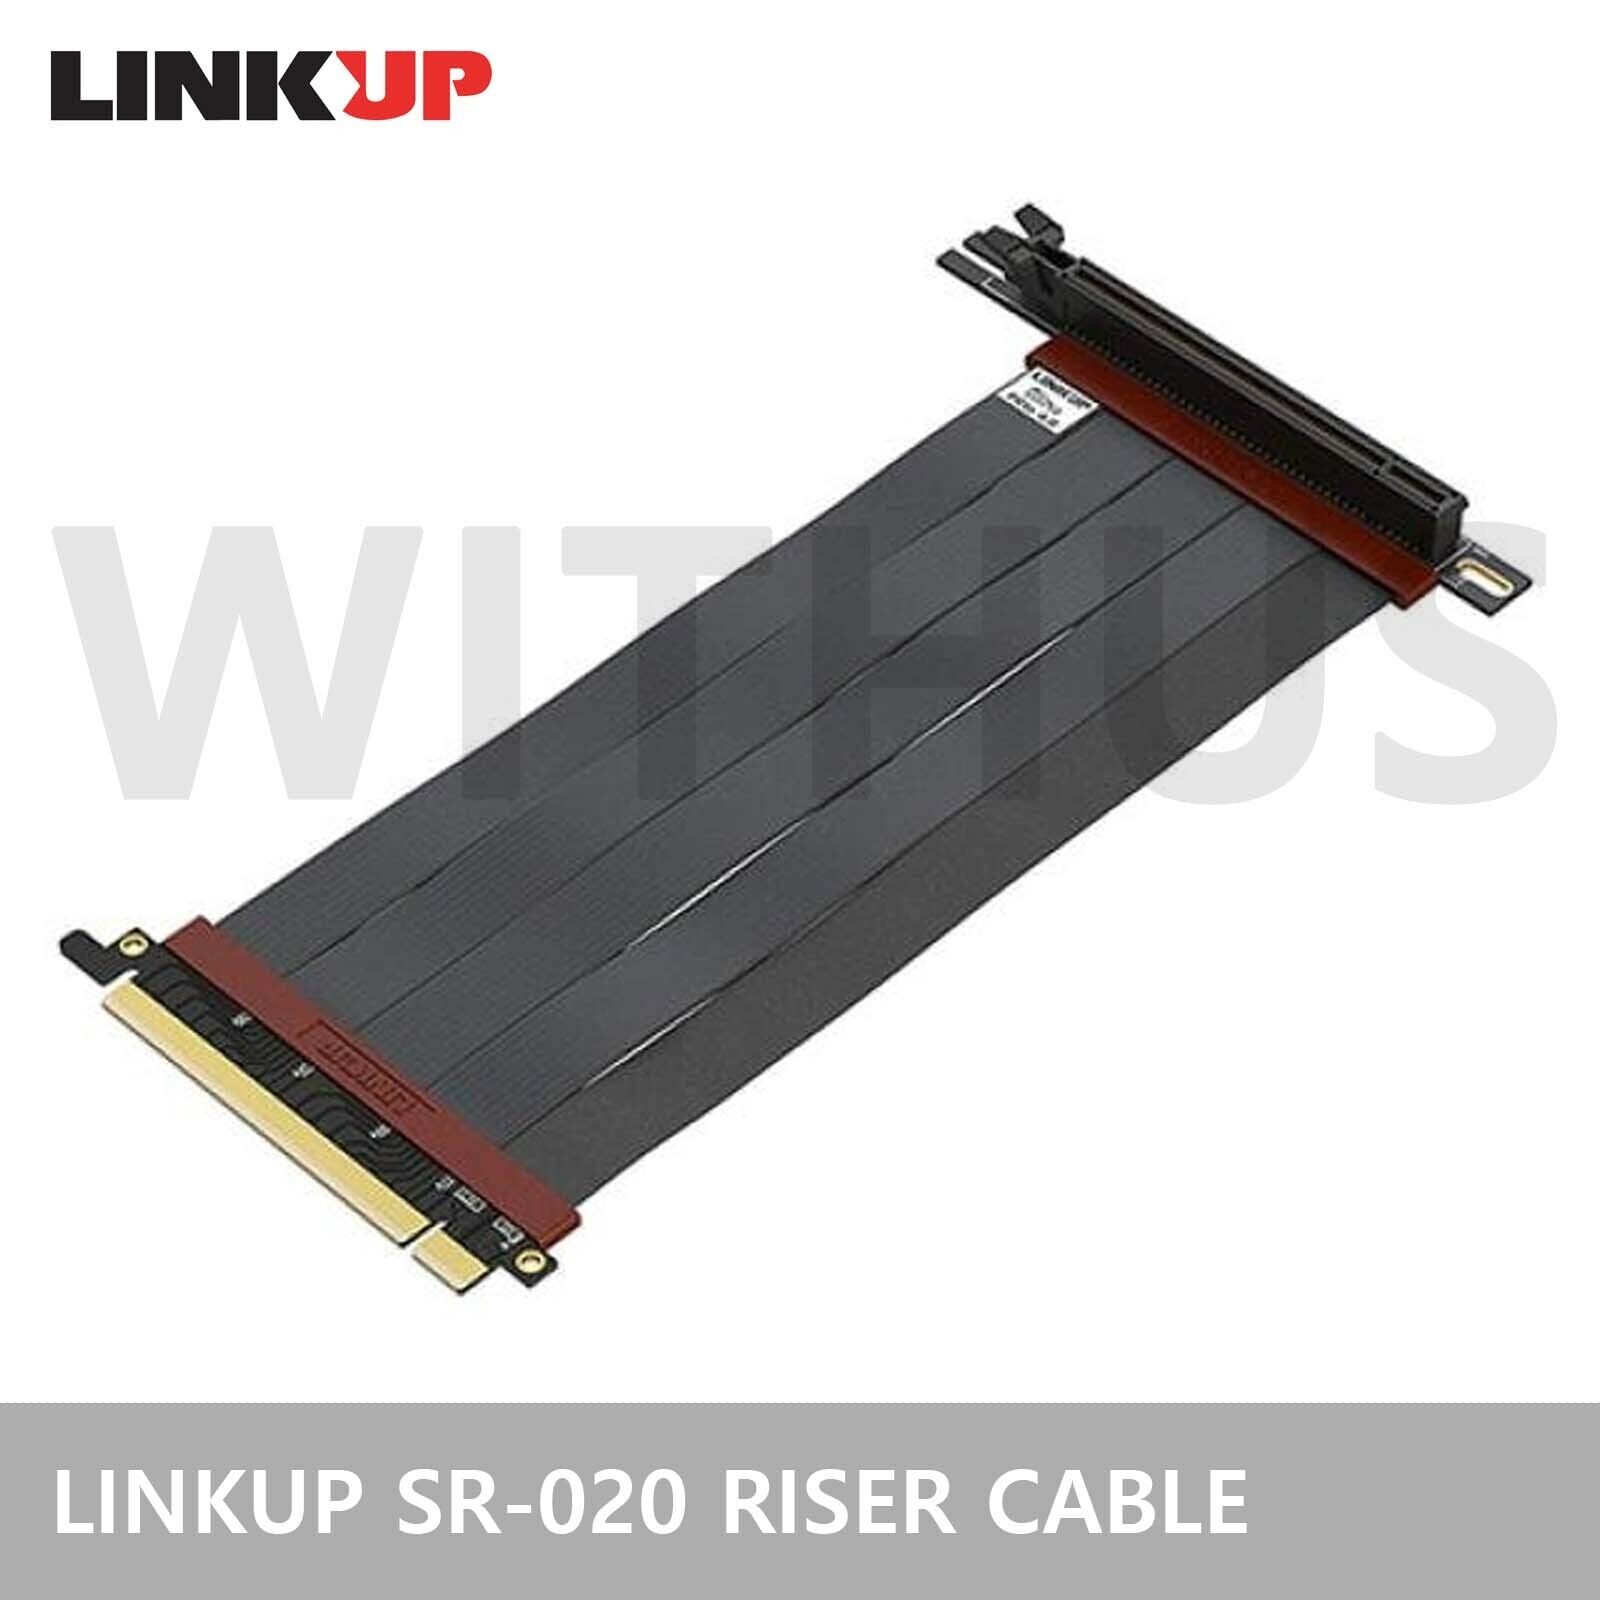 LINKUP SR-020 Ultra PCI-e 4.0 x 16 RISER CABLE 200mm 16GT/s -Fedex Tracking